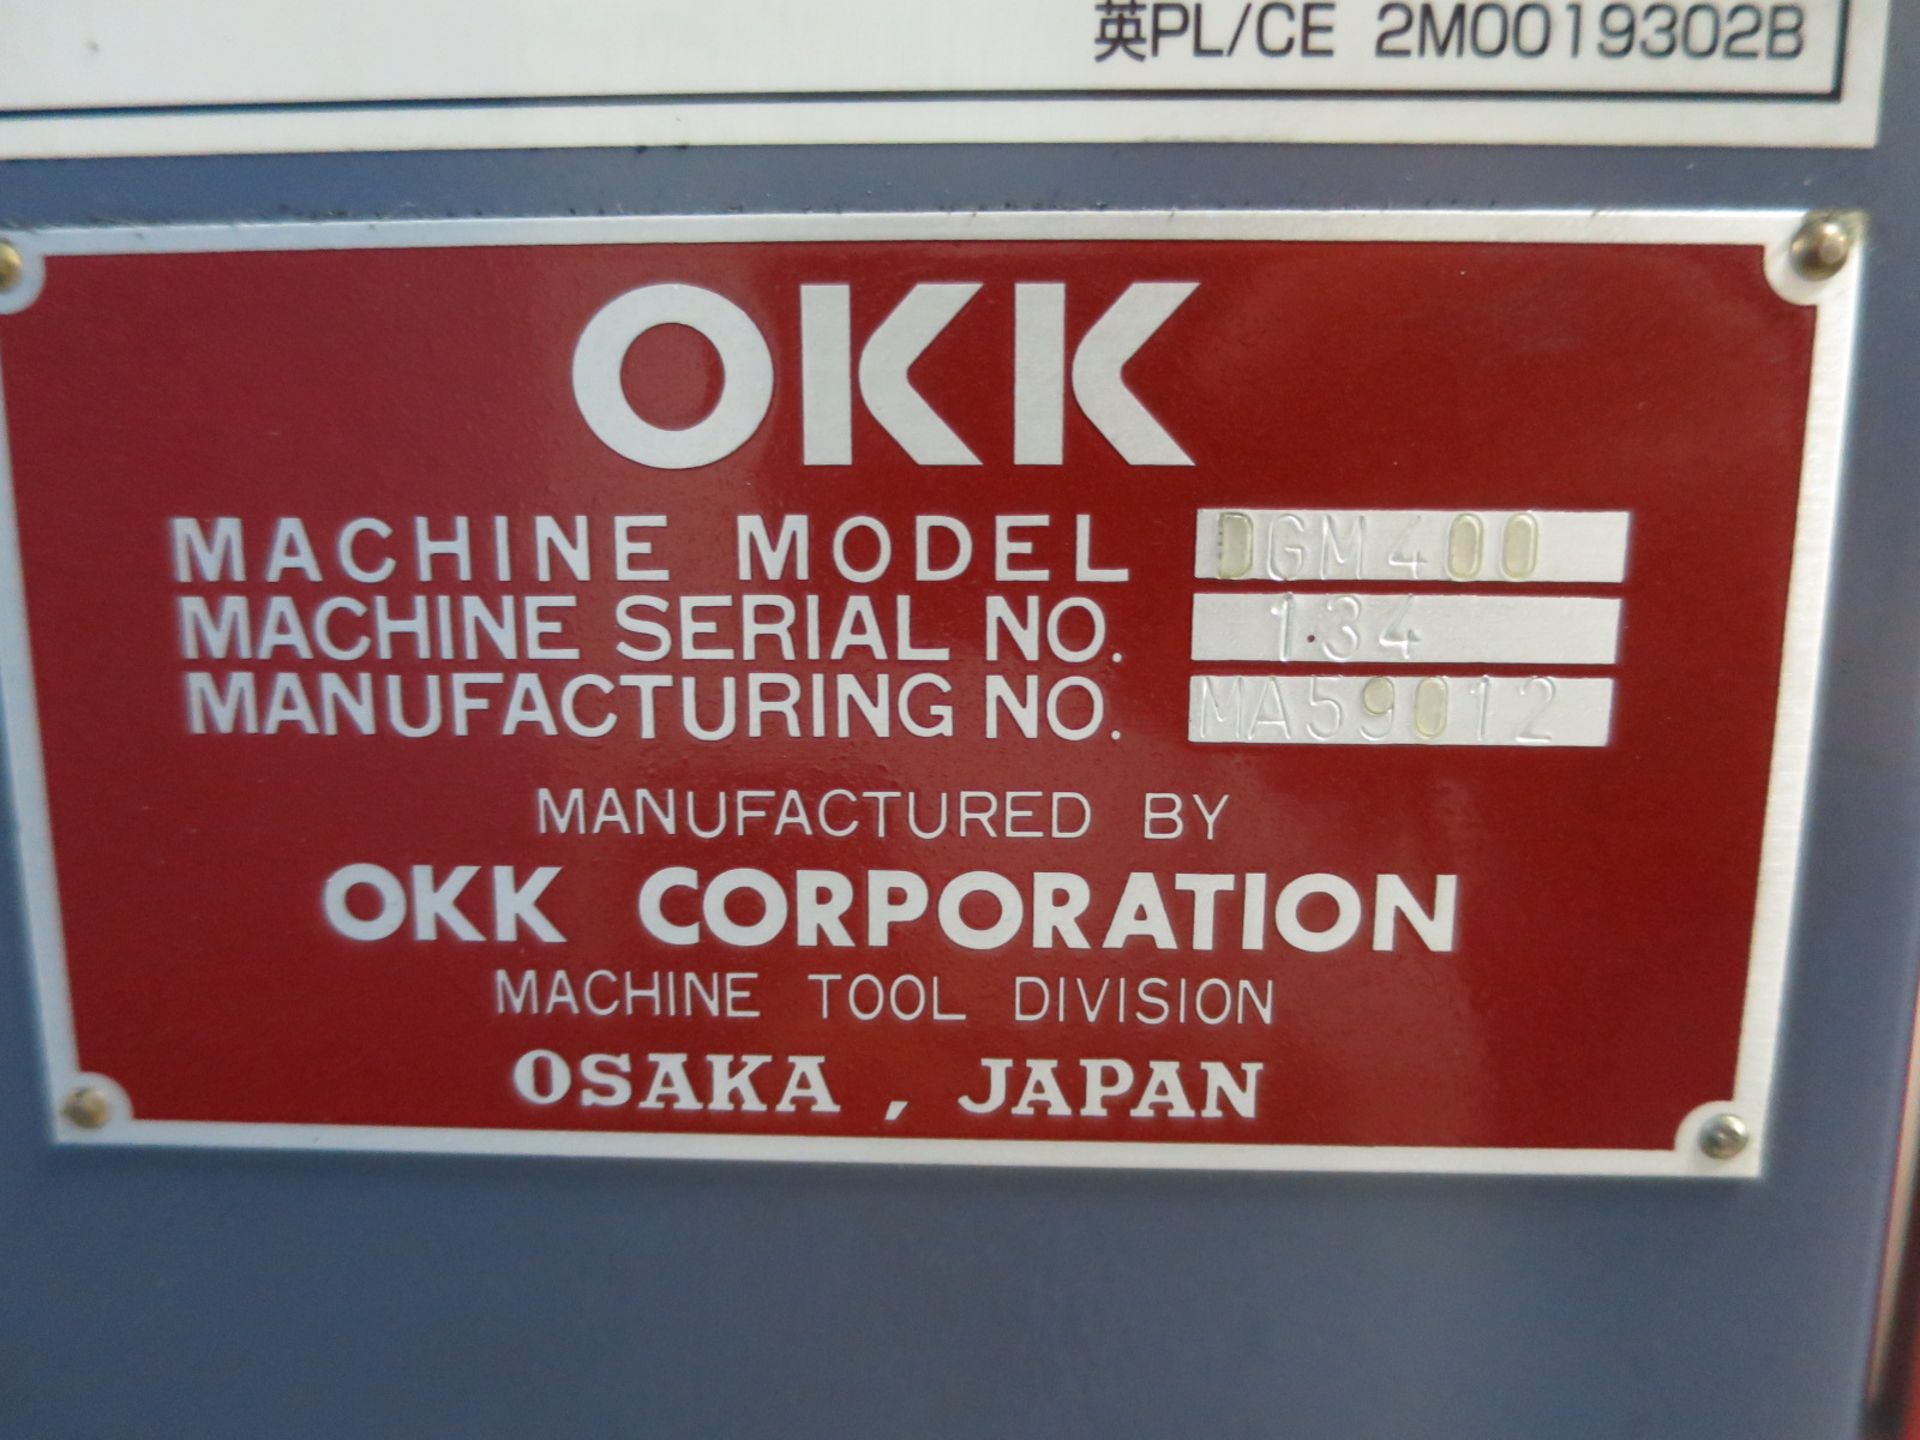 OKK MODEL DGM 400 3-AXIS CNC HIGH SPEED GRAPHITE MACHINING CENTER, S/N 134, NEW 2001 - Image 10 of 14